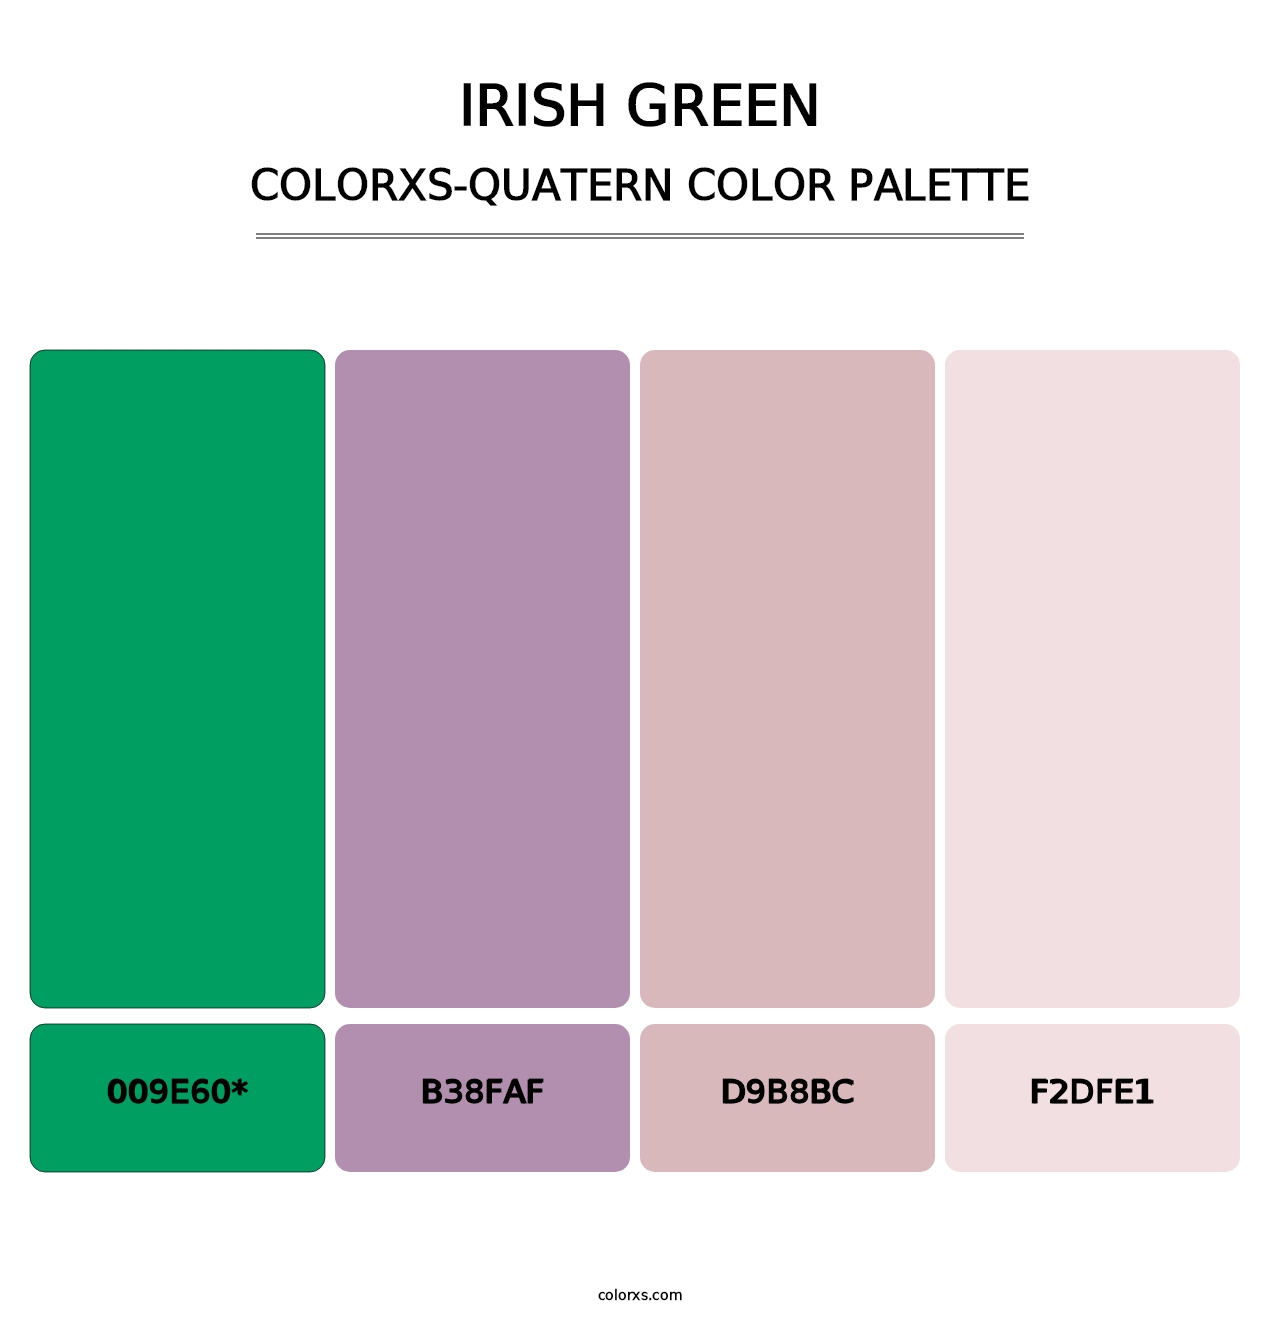 Irish Green - Colorxs Quatern Palette